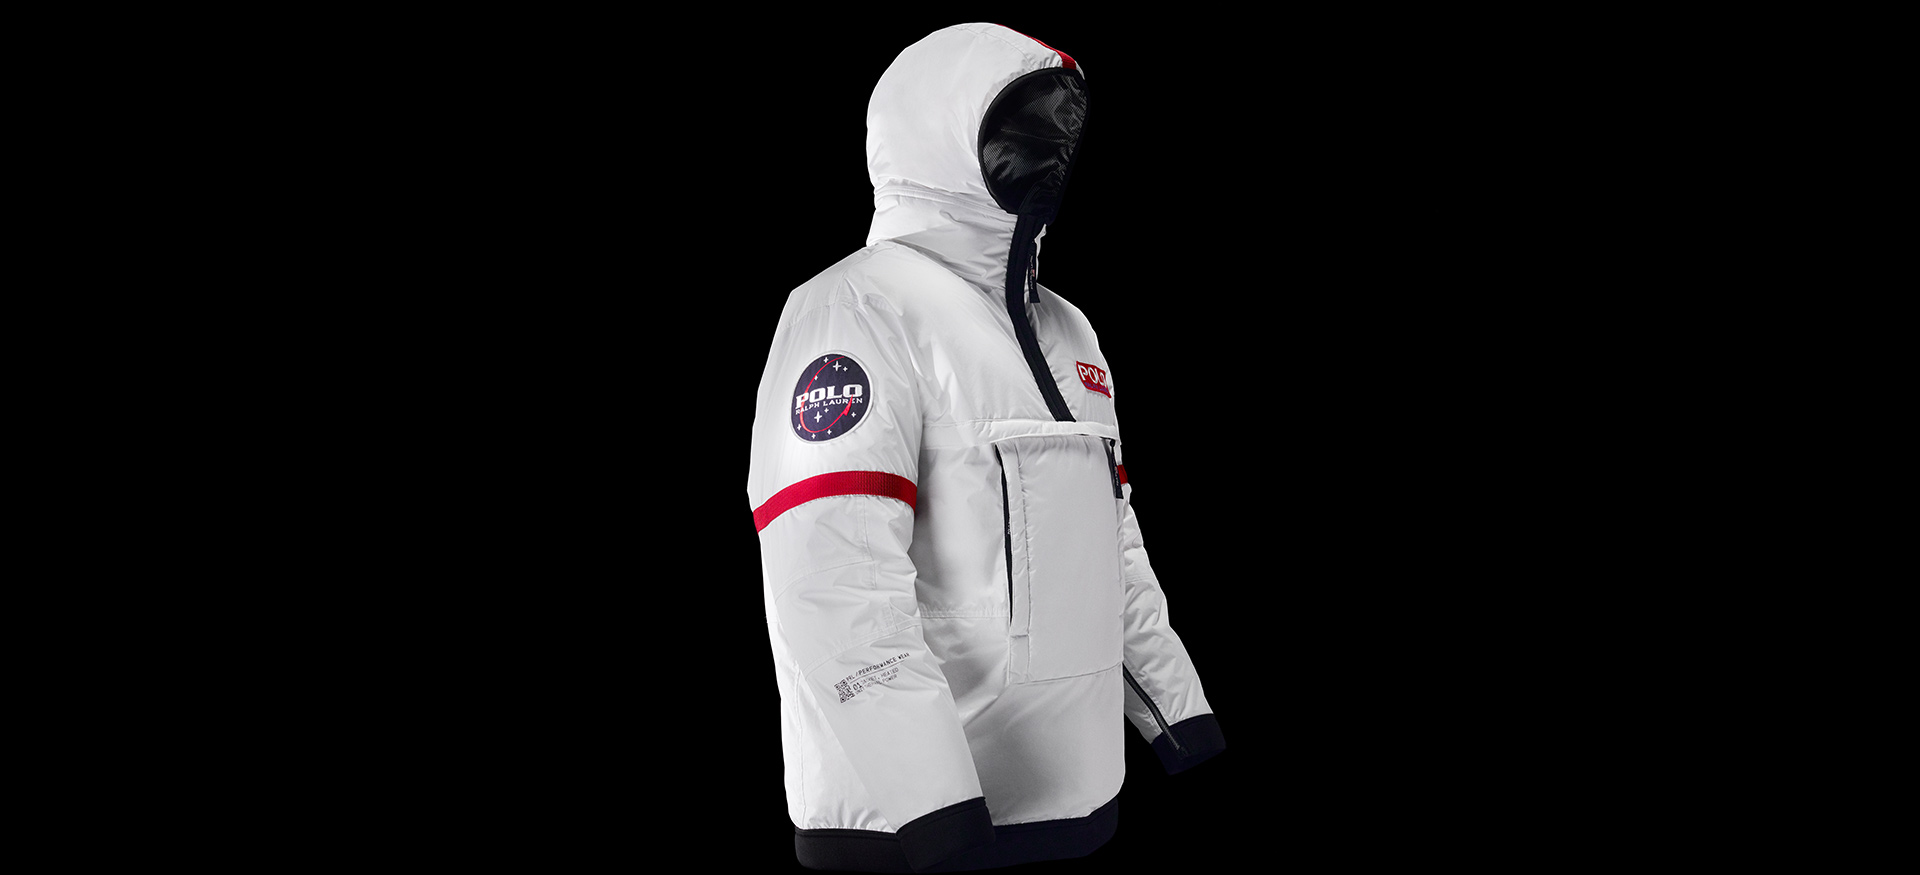 Photograph of hooded white RL Heat jacket against black background